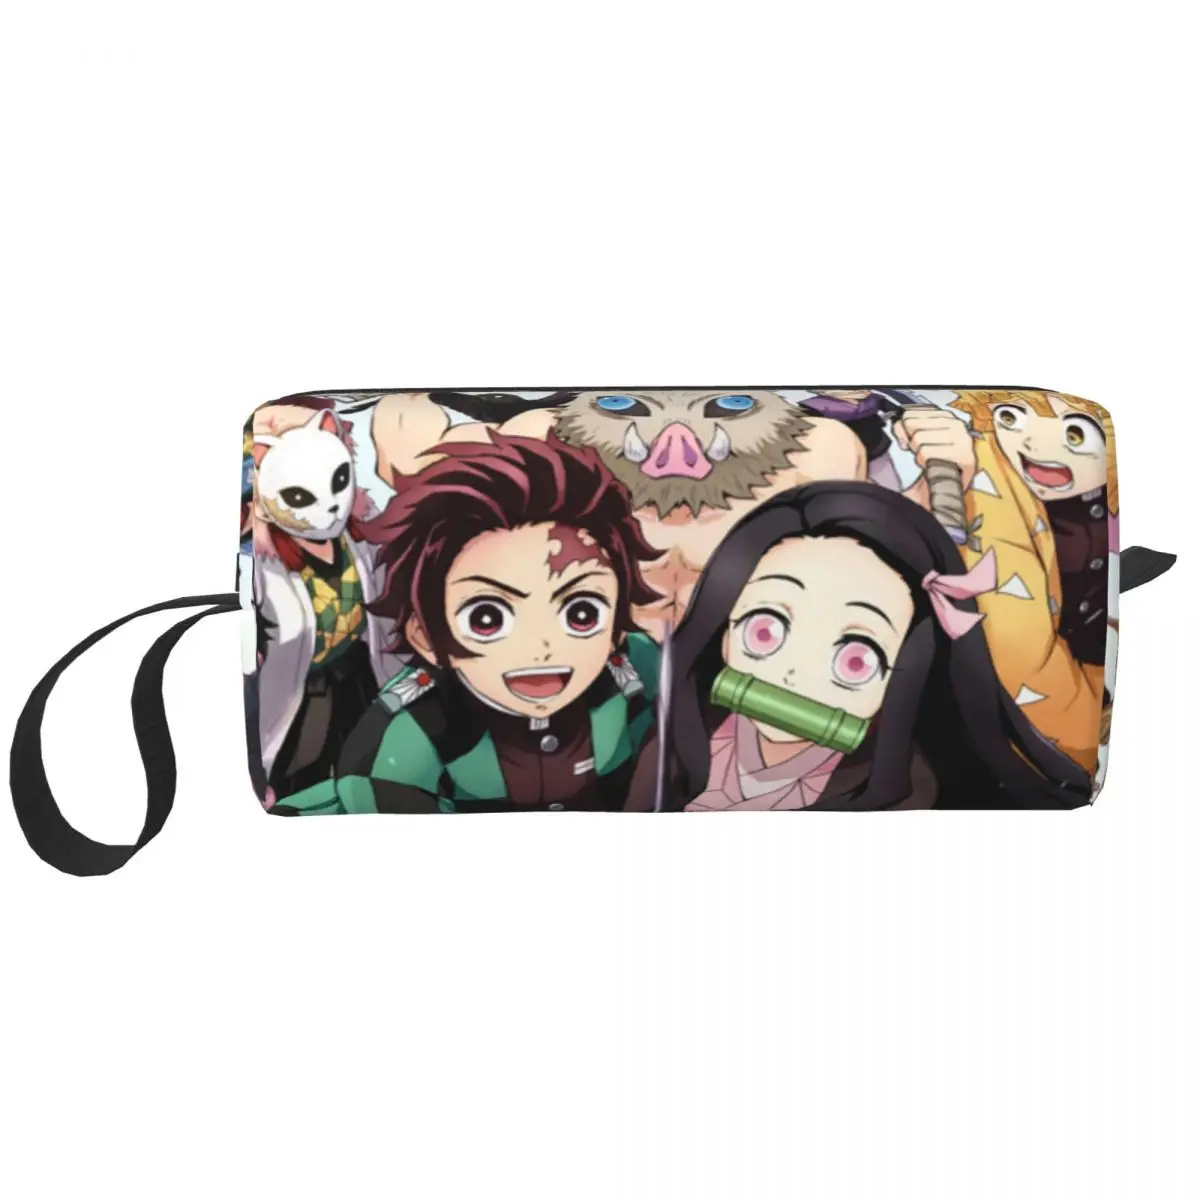 

Kimetsu No Yaiba Demon Slayer Cosmetic Bag for Women Makeup Bags Anime Travel Water Resistant Toiletry Bag Organizer Storage Bag